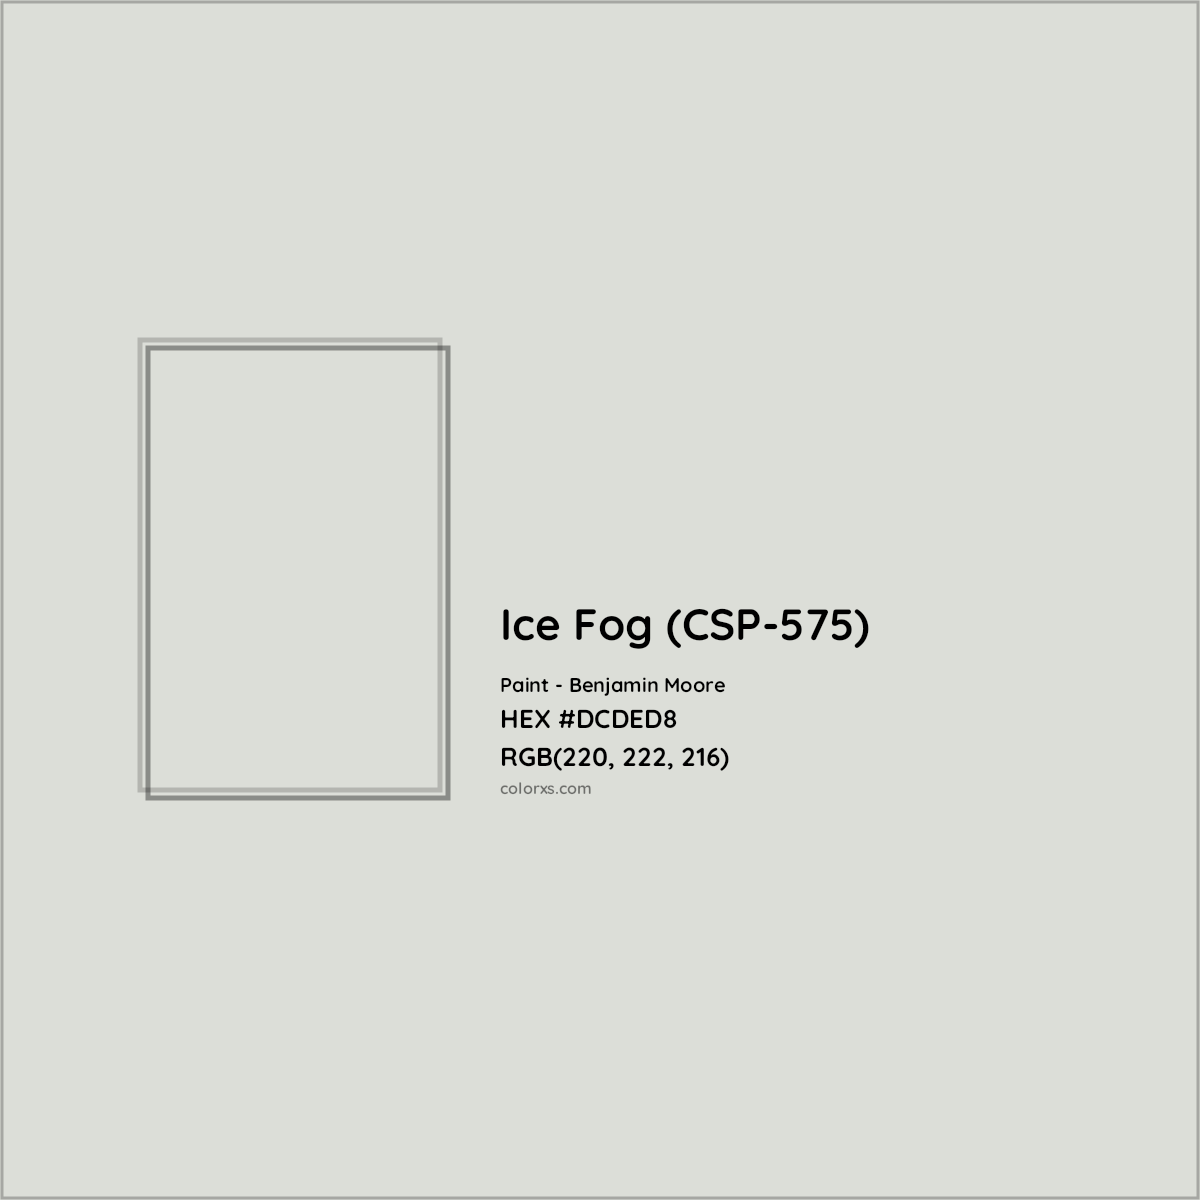 HEX #DCDED8 Ice Fog (CSP-575) Paint Benjamin Moore - Color Code